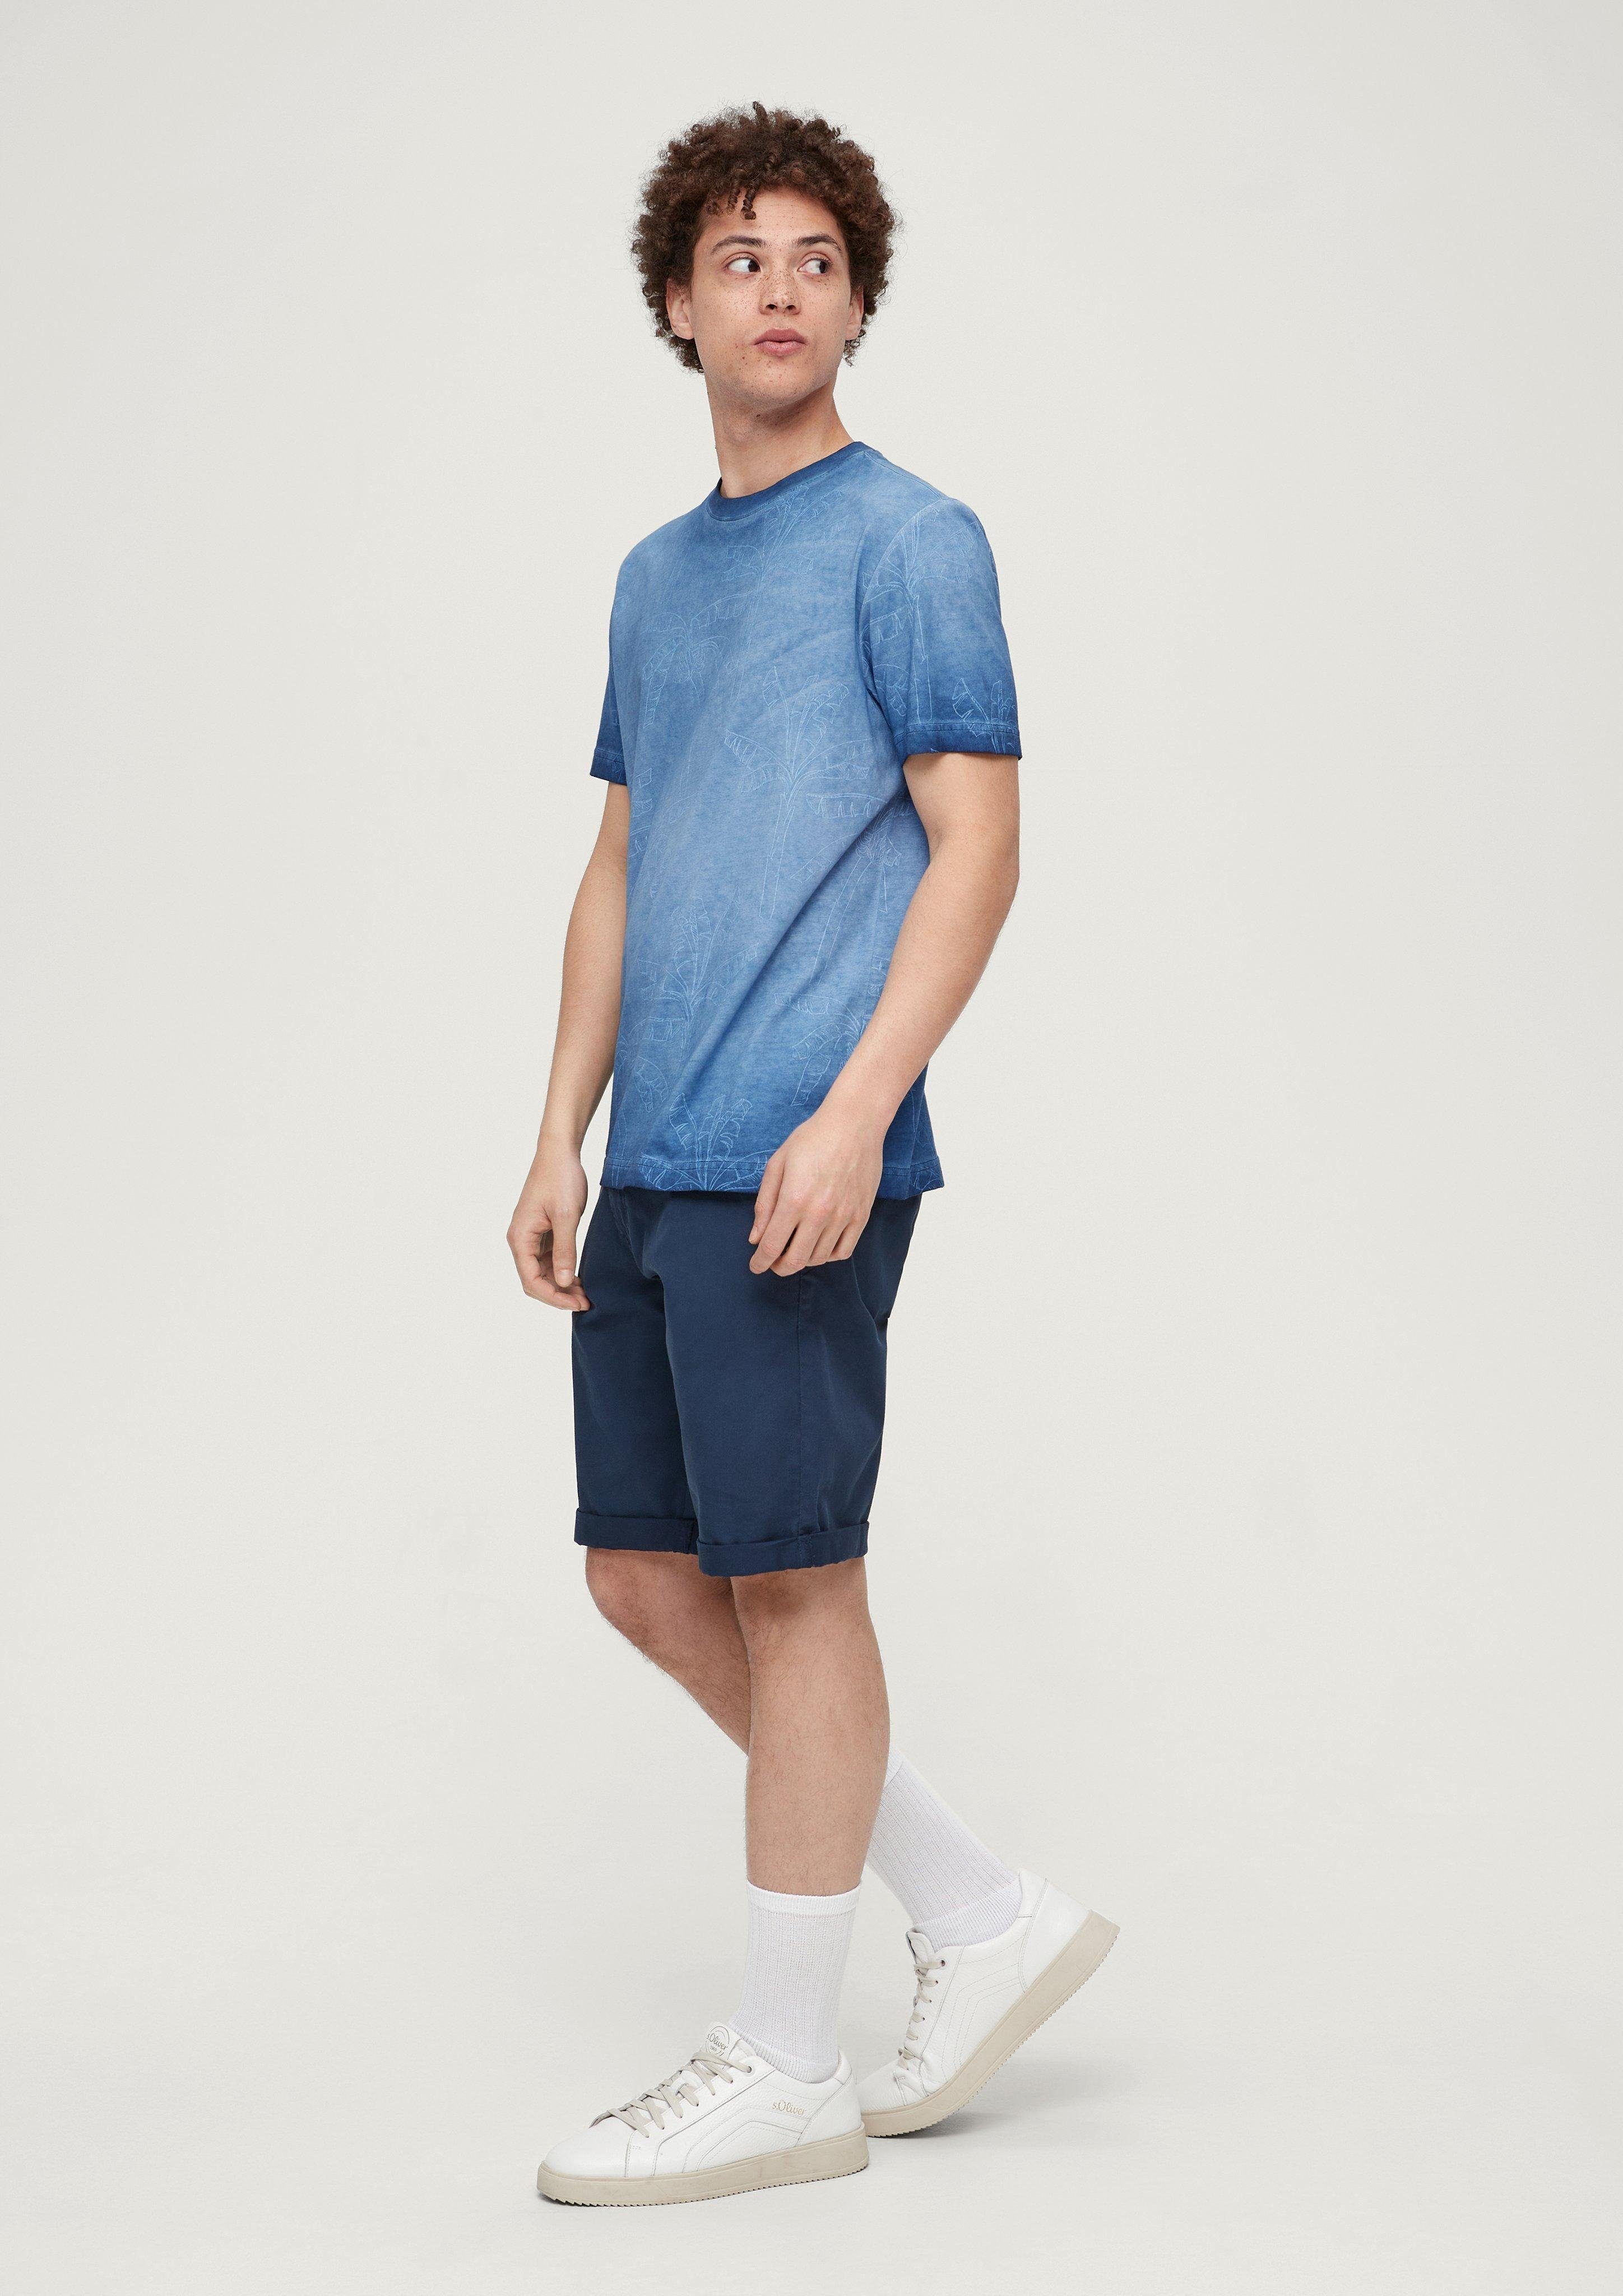 Kurzarmshirt tiefblau reiner aus QS T-Shirt Baumwolle